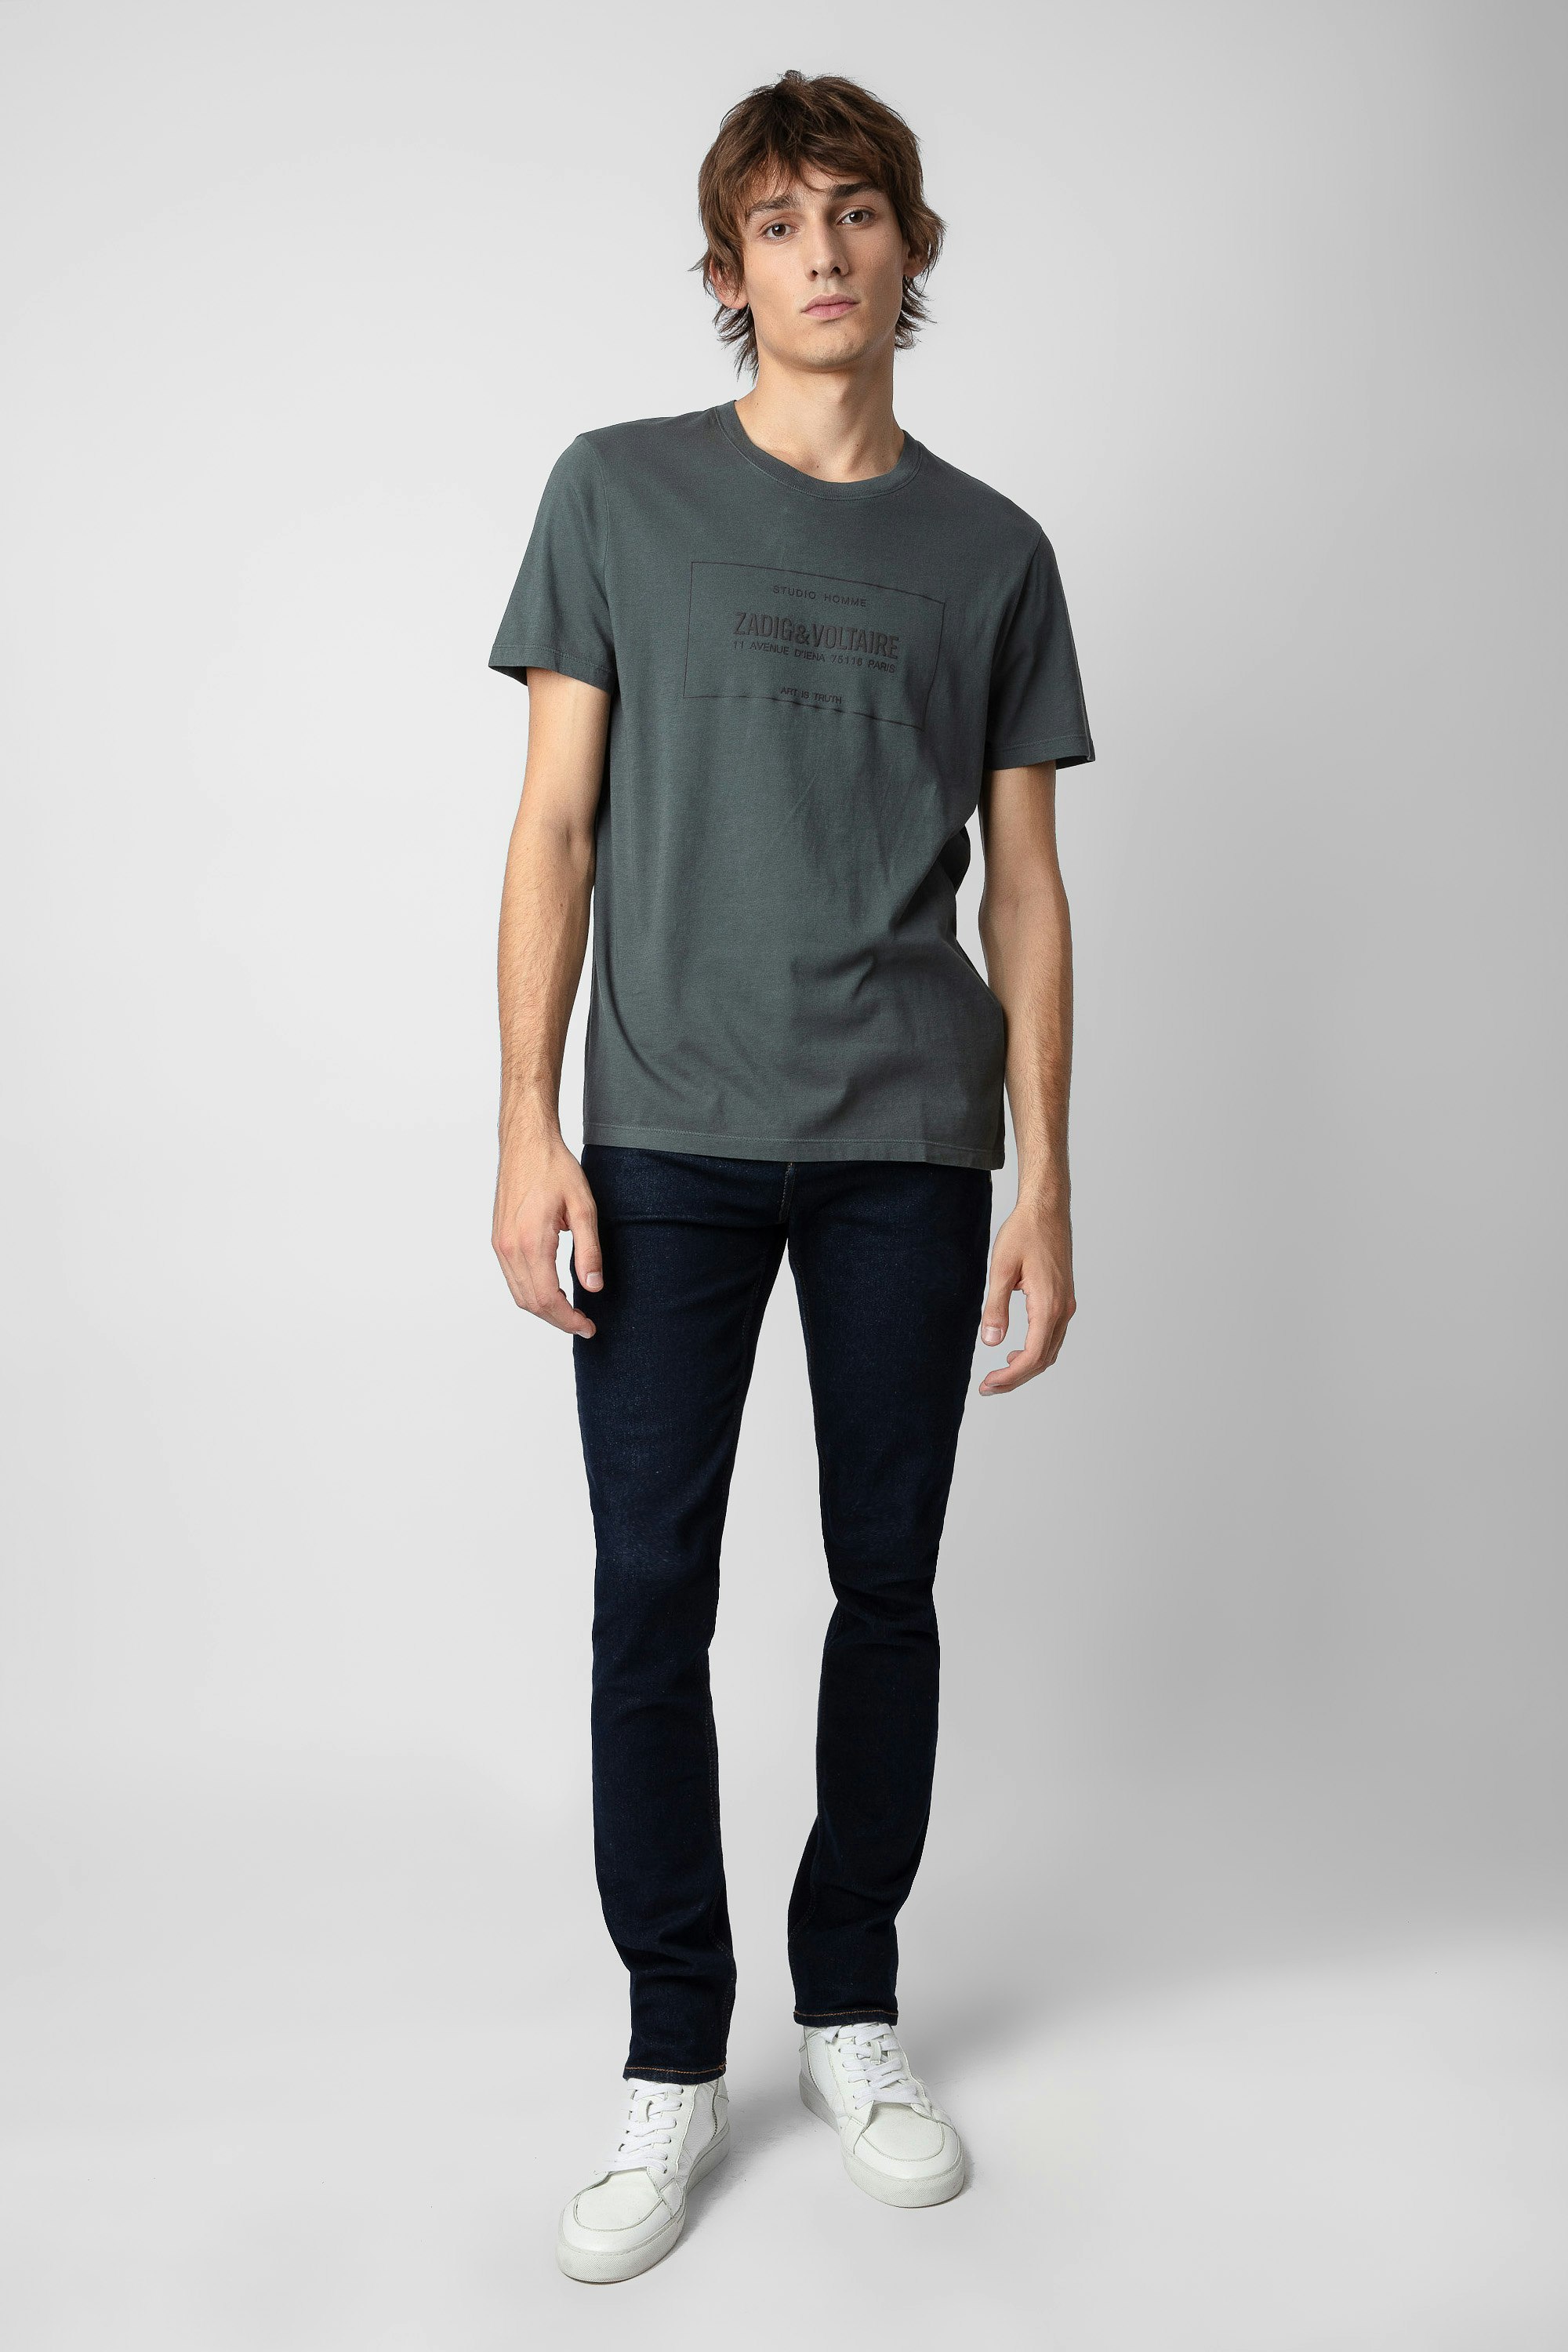 Ted T-Shirt - Men’s verdigris cotton T-shirt with studio insignia.